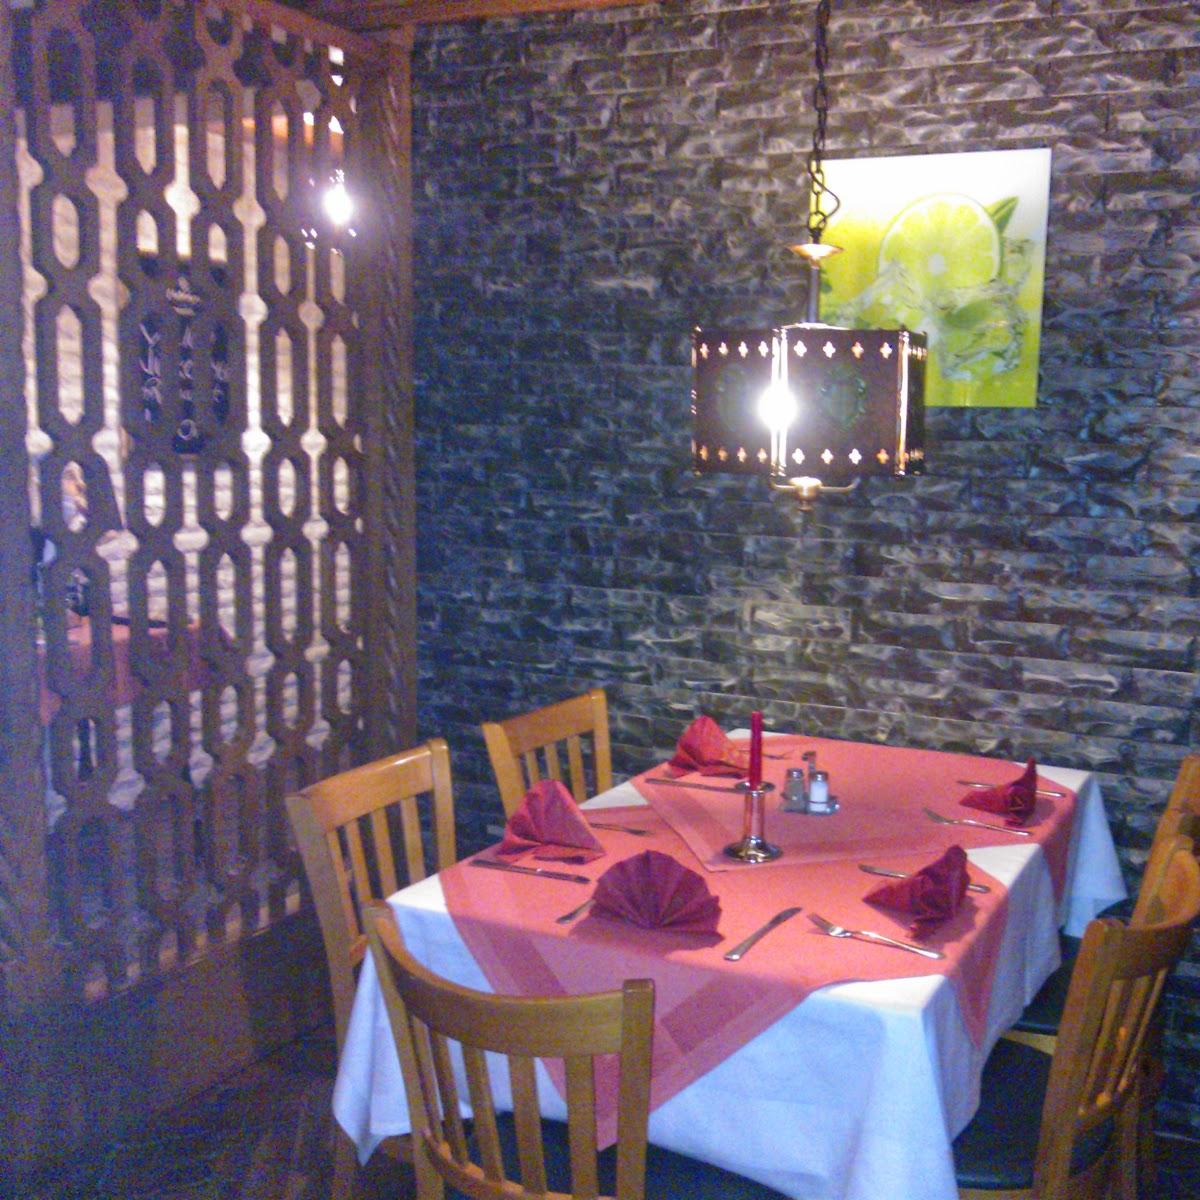 Restaurant "Da Toni" in Fuldatal